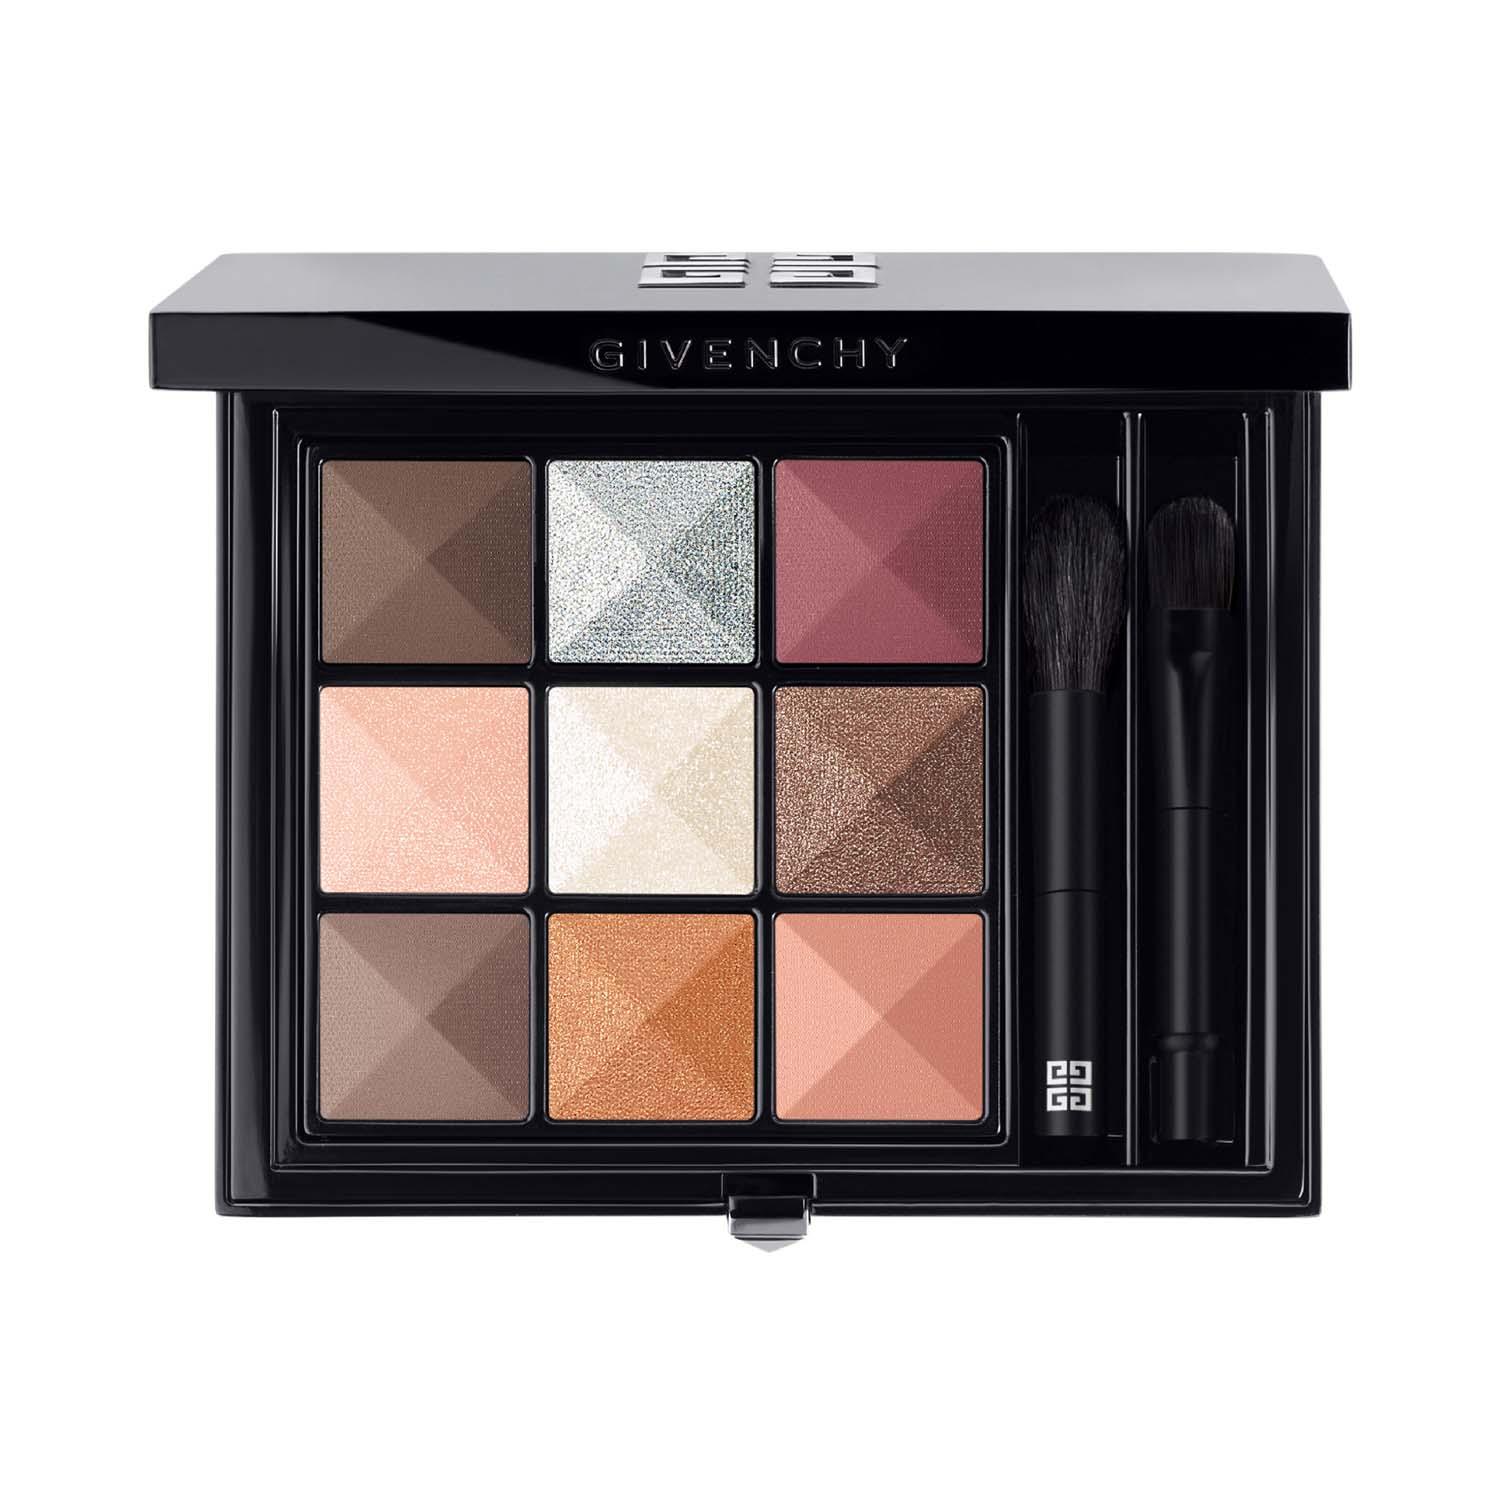 Givenchy | Givenchy Le 9 DG Eyeshadow Palette - N1 R1 (8g)